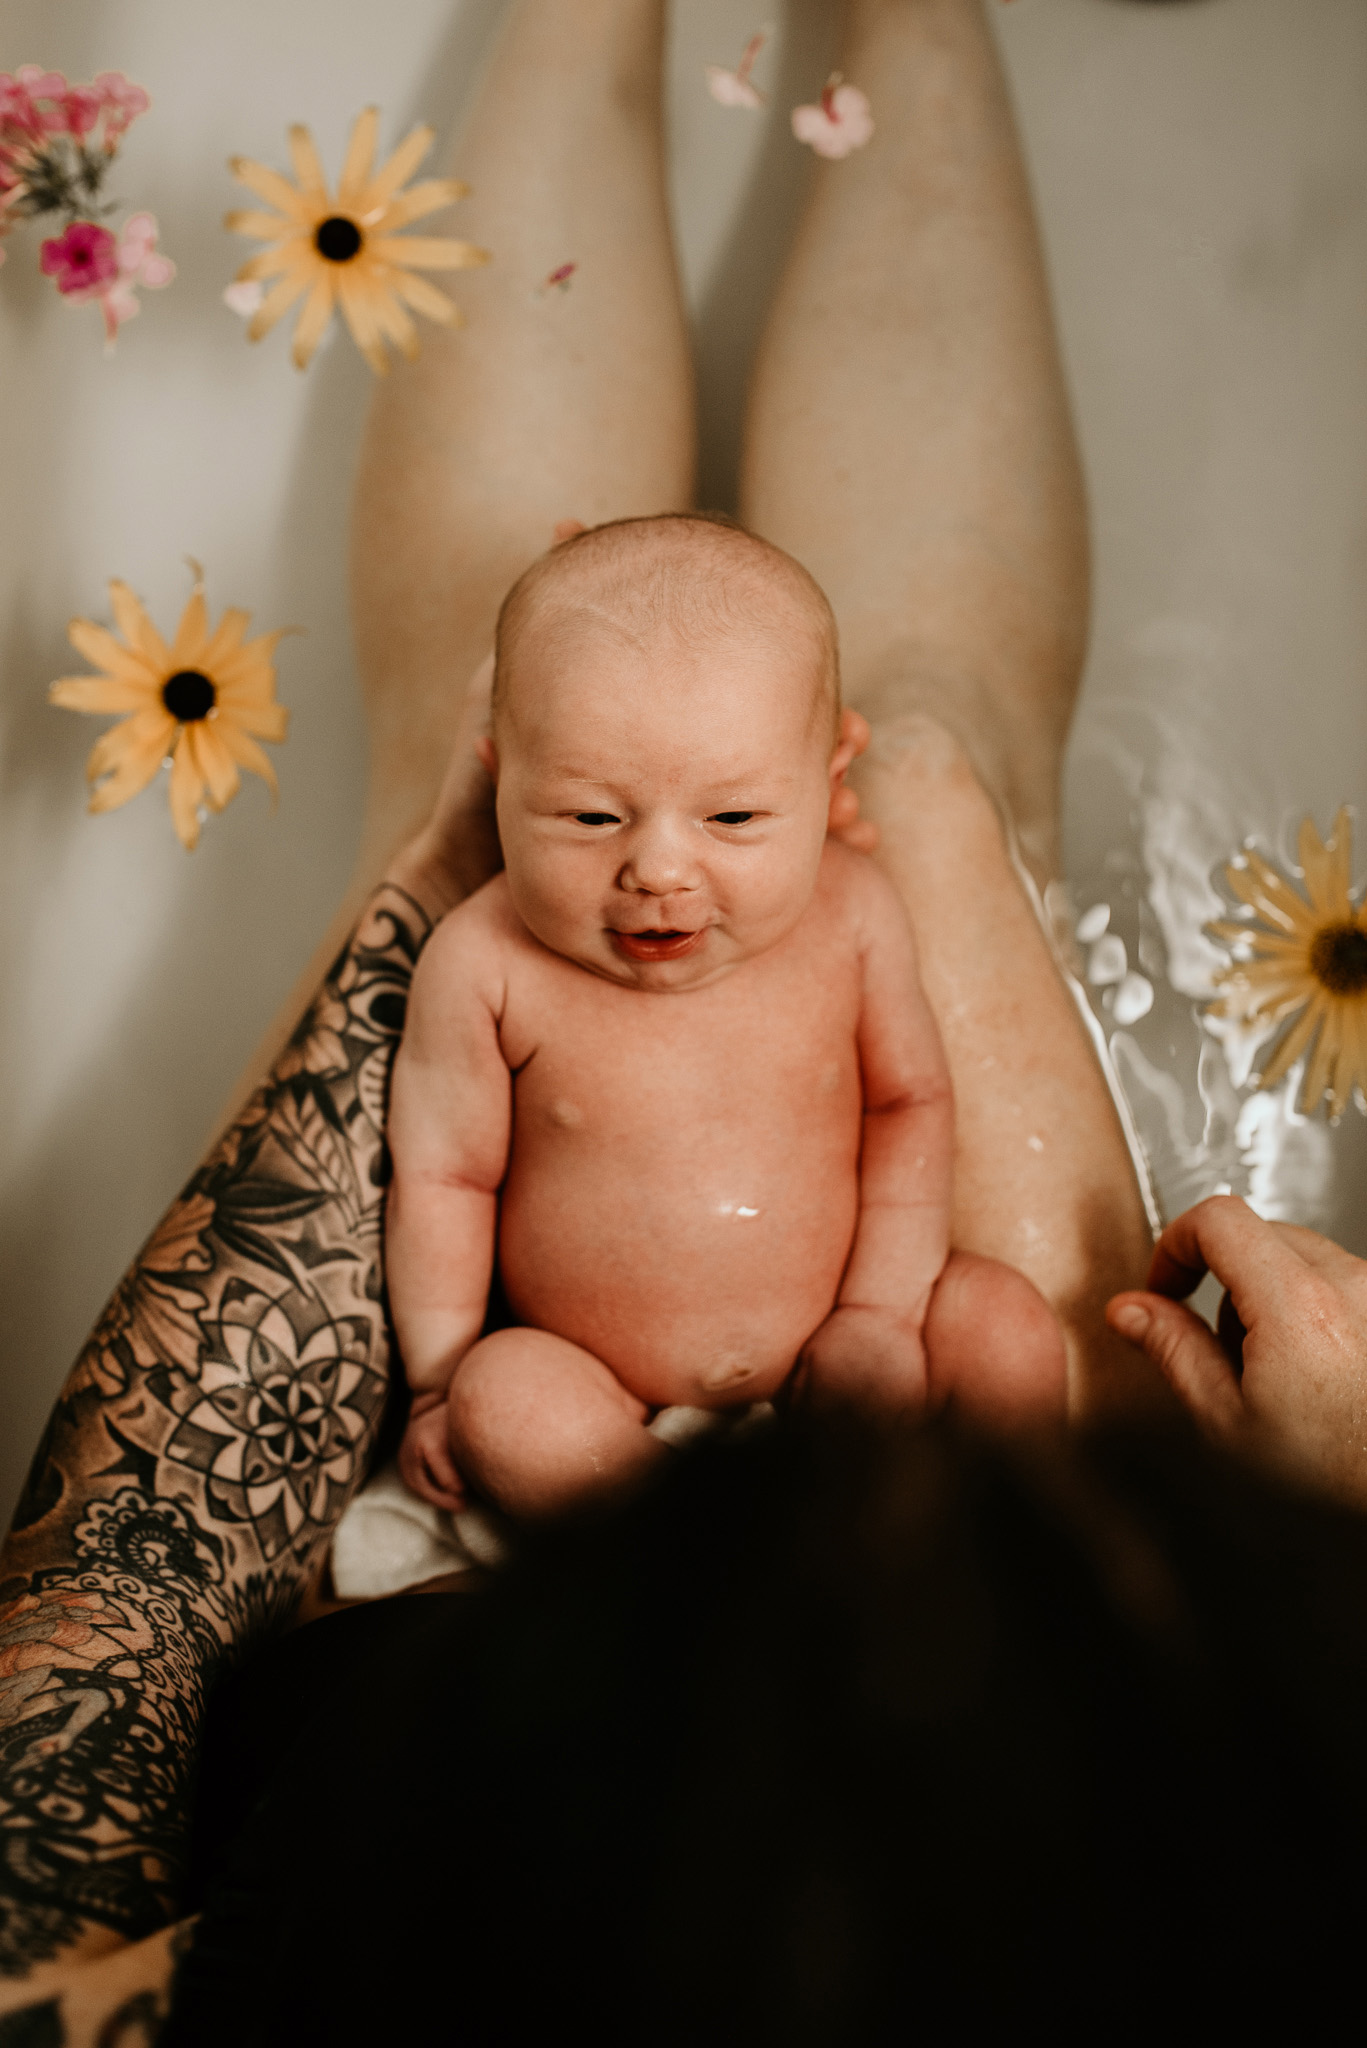 Newborn baby with mother bathtub flowers